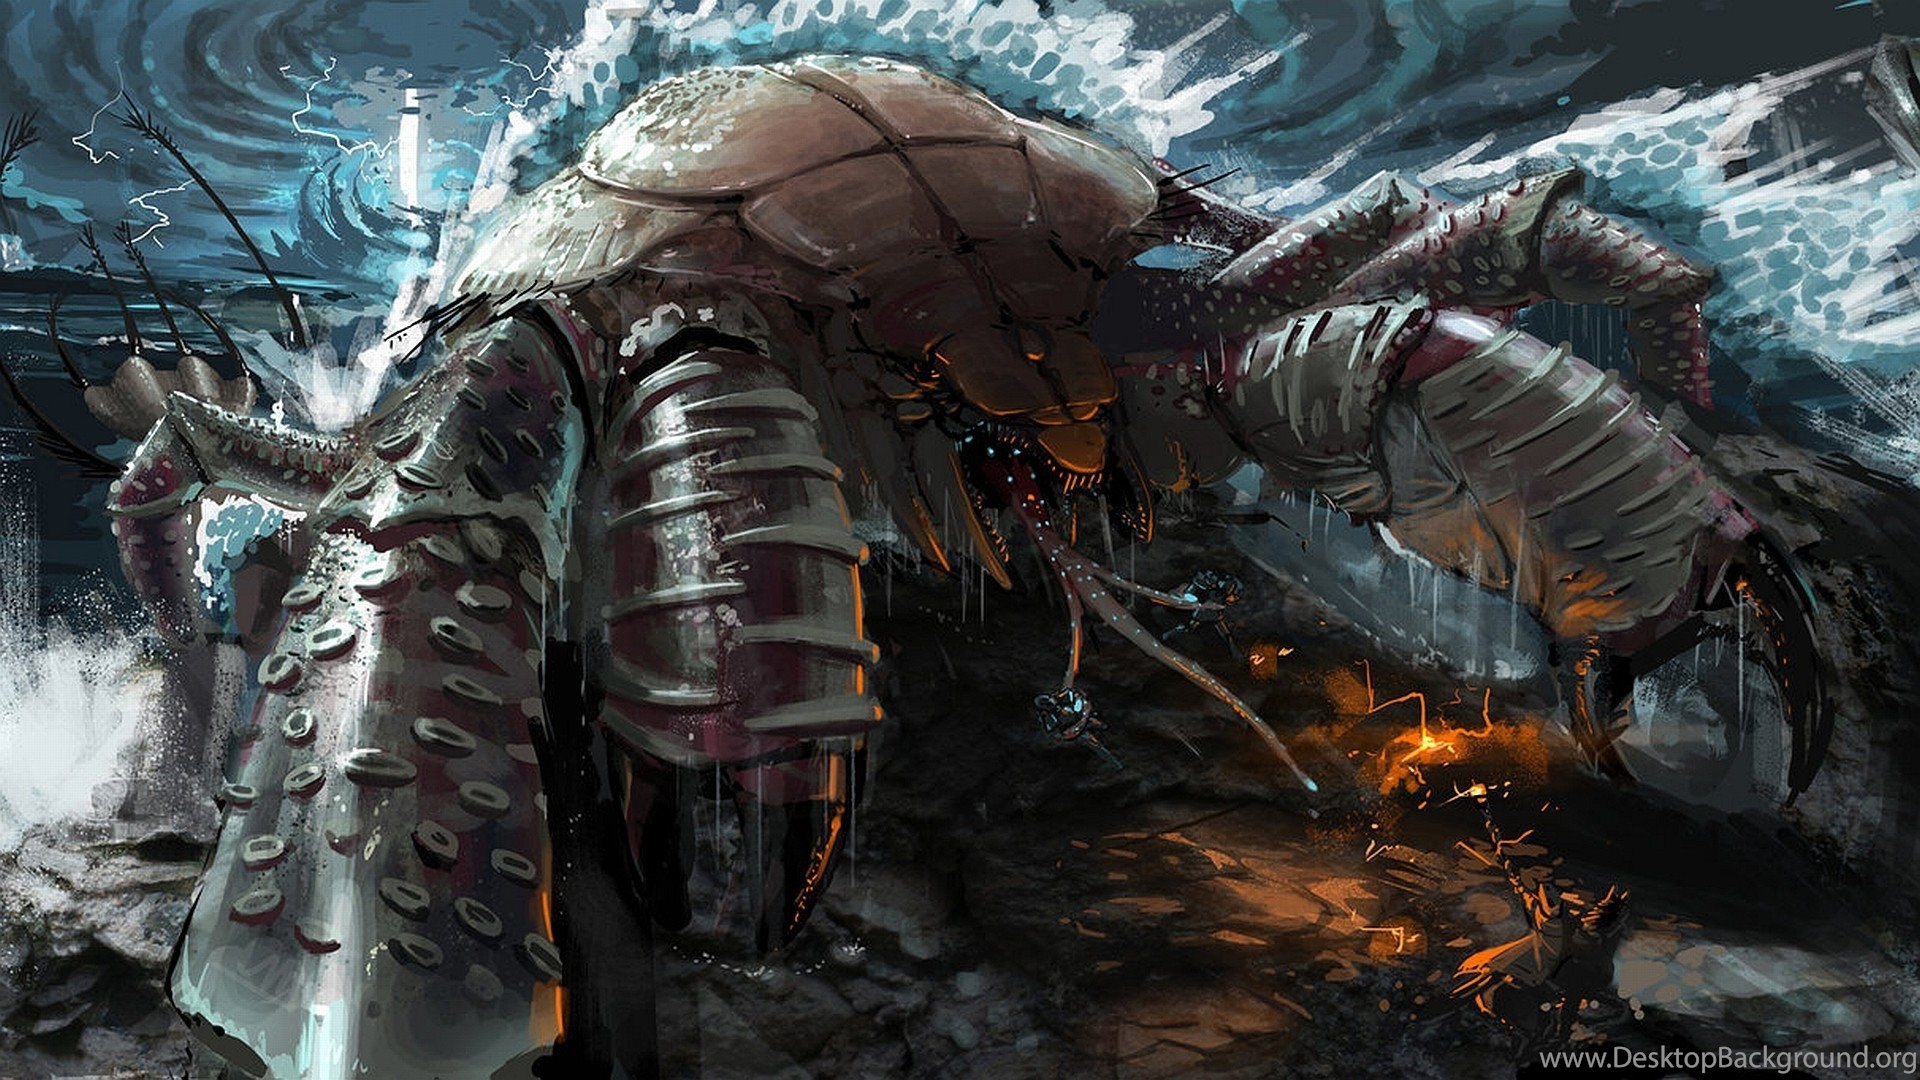 Popular - Giant Crab Monster , HD Wallpaper & Backgrounds